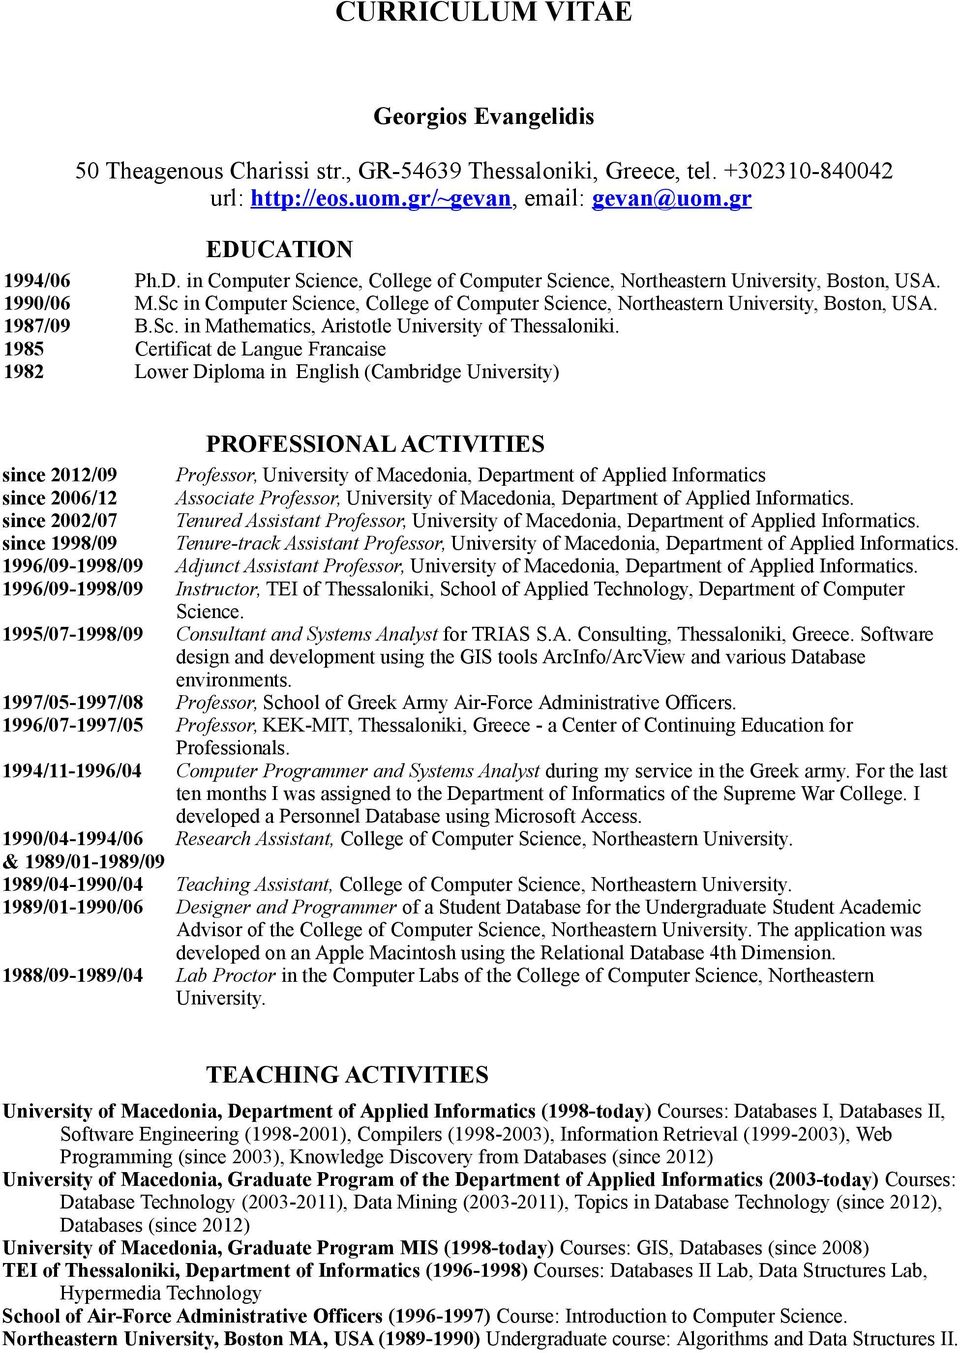 Sc in Computer Science, College of Computer Science, Northeastern University, Boston, USA. 1987/09 B.Sc. in Mathematics, Aristotle University of Thessaloniki.